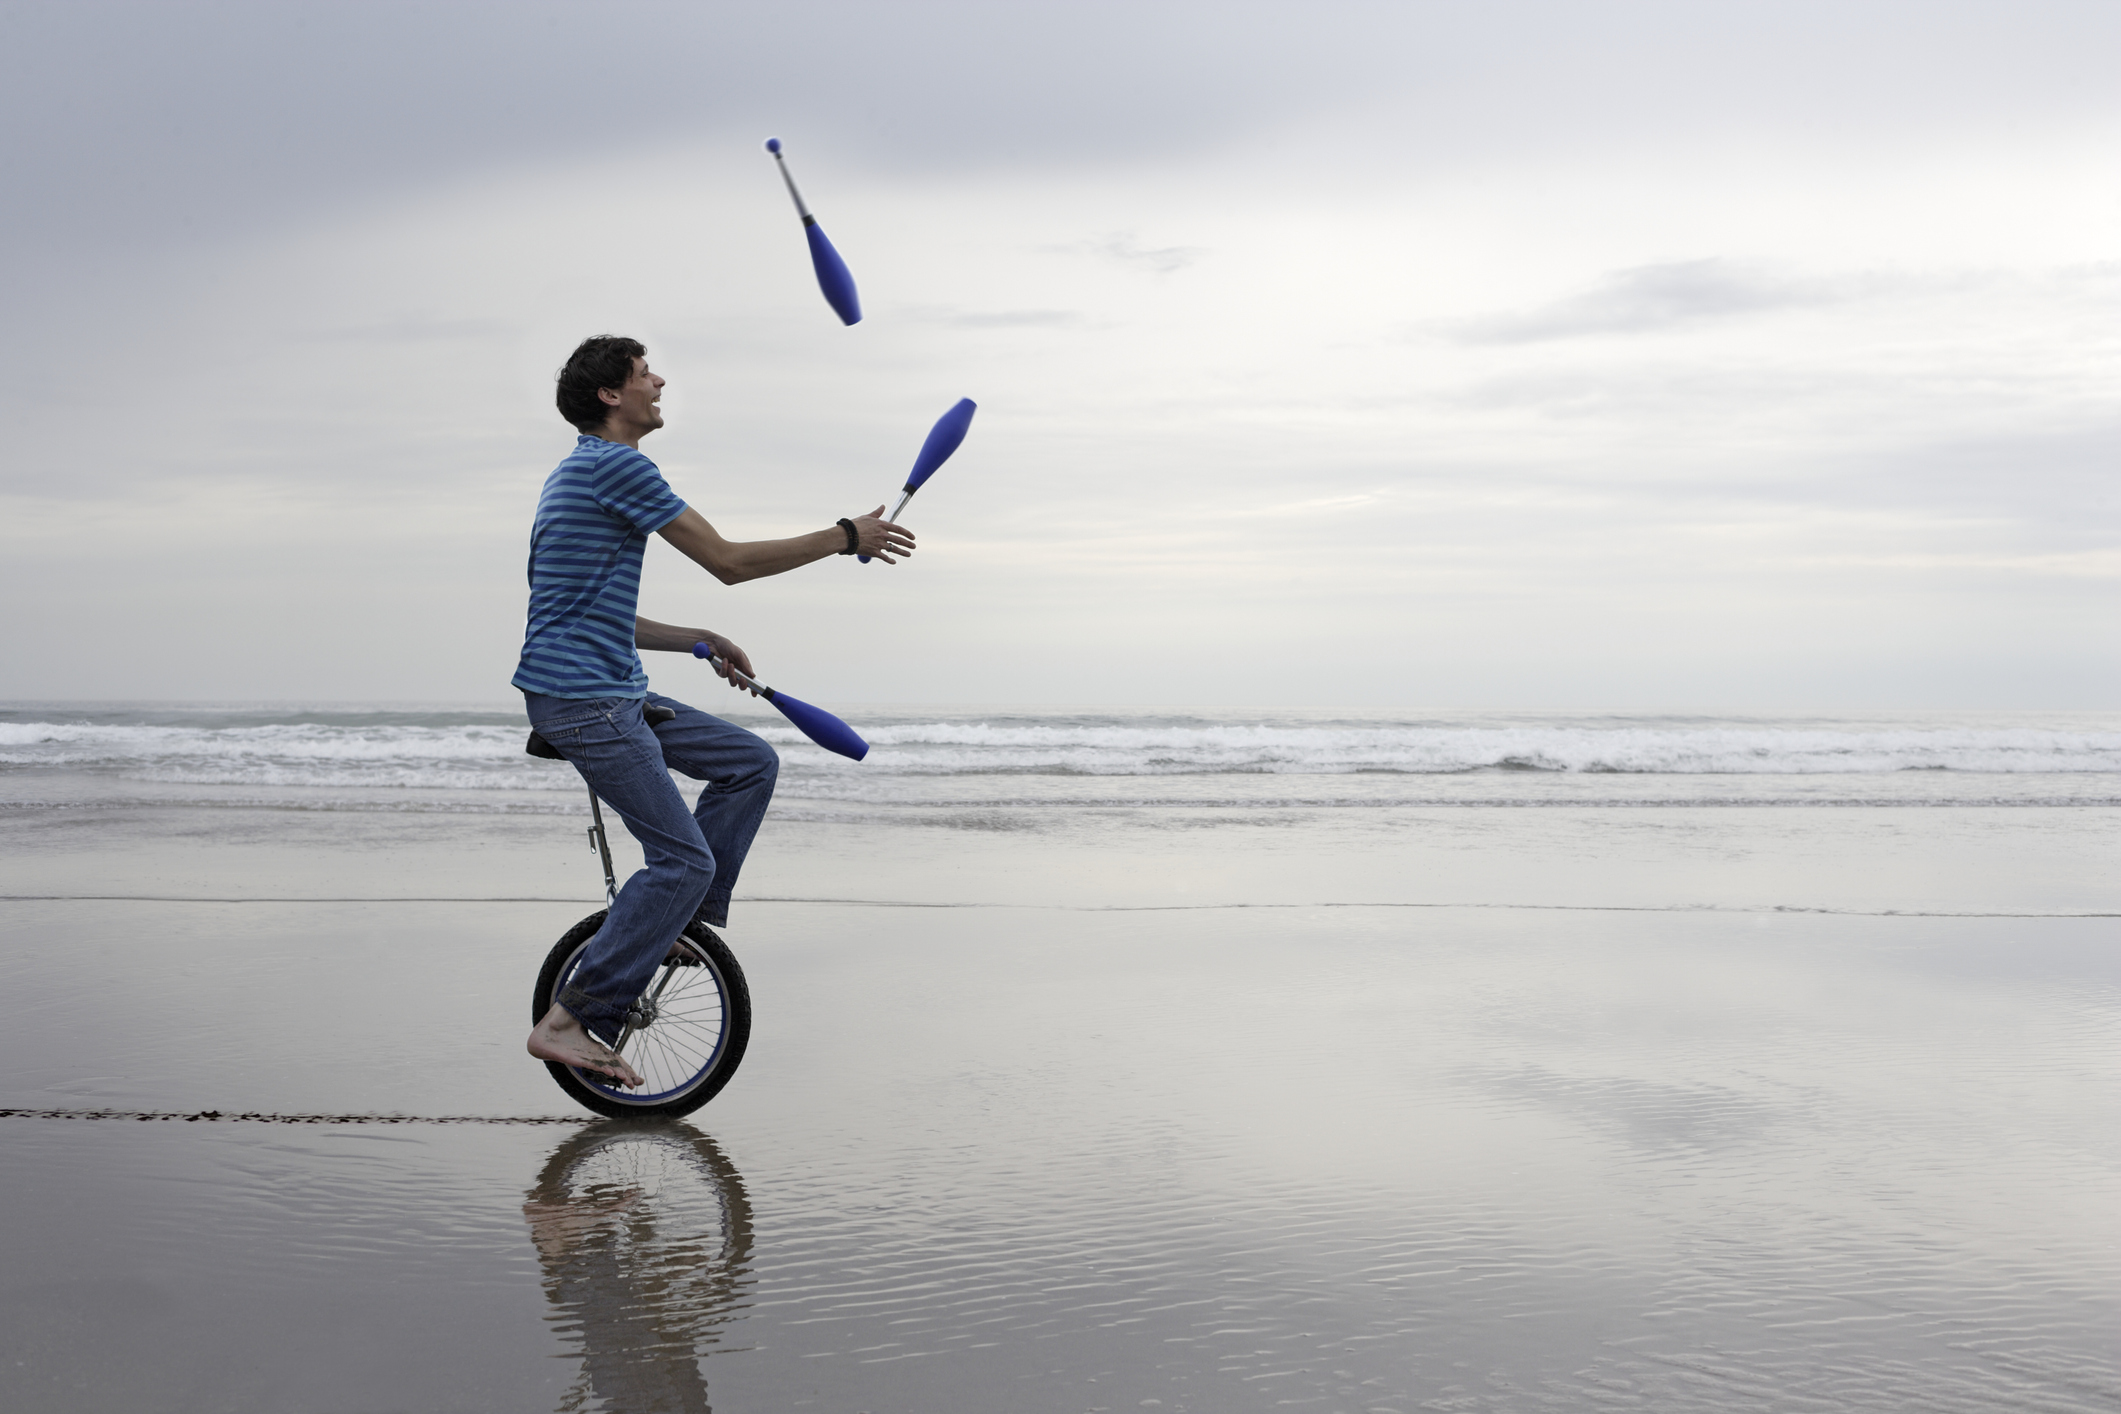 Man riding unicycle while juggling